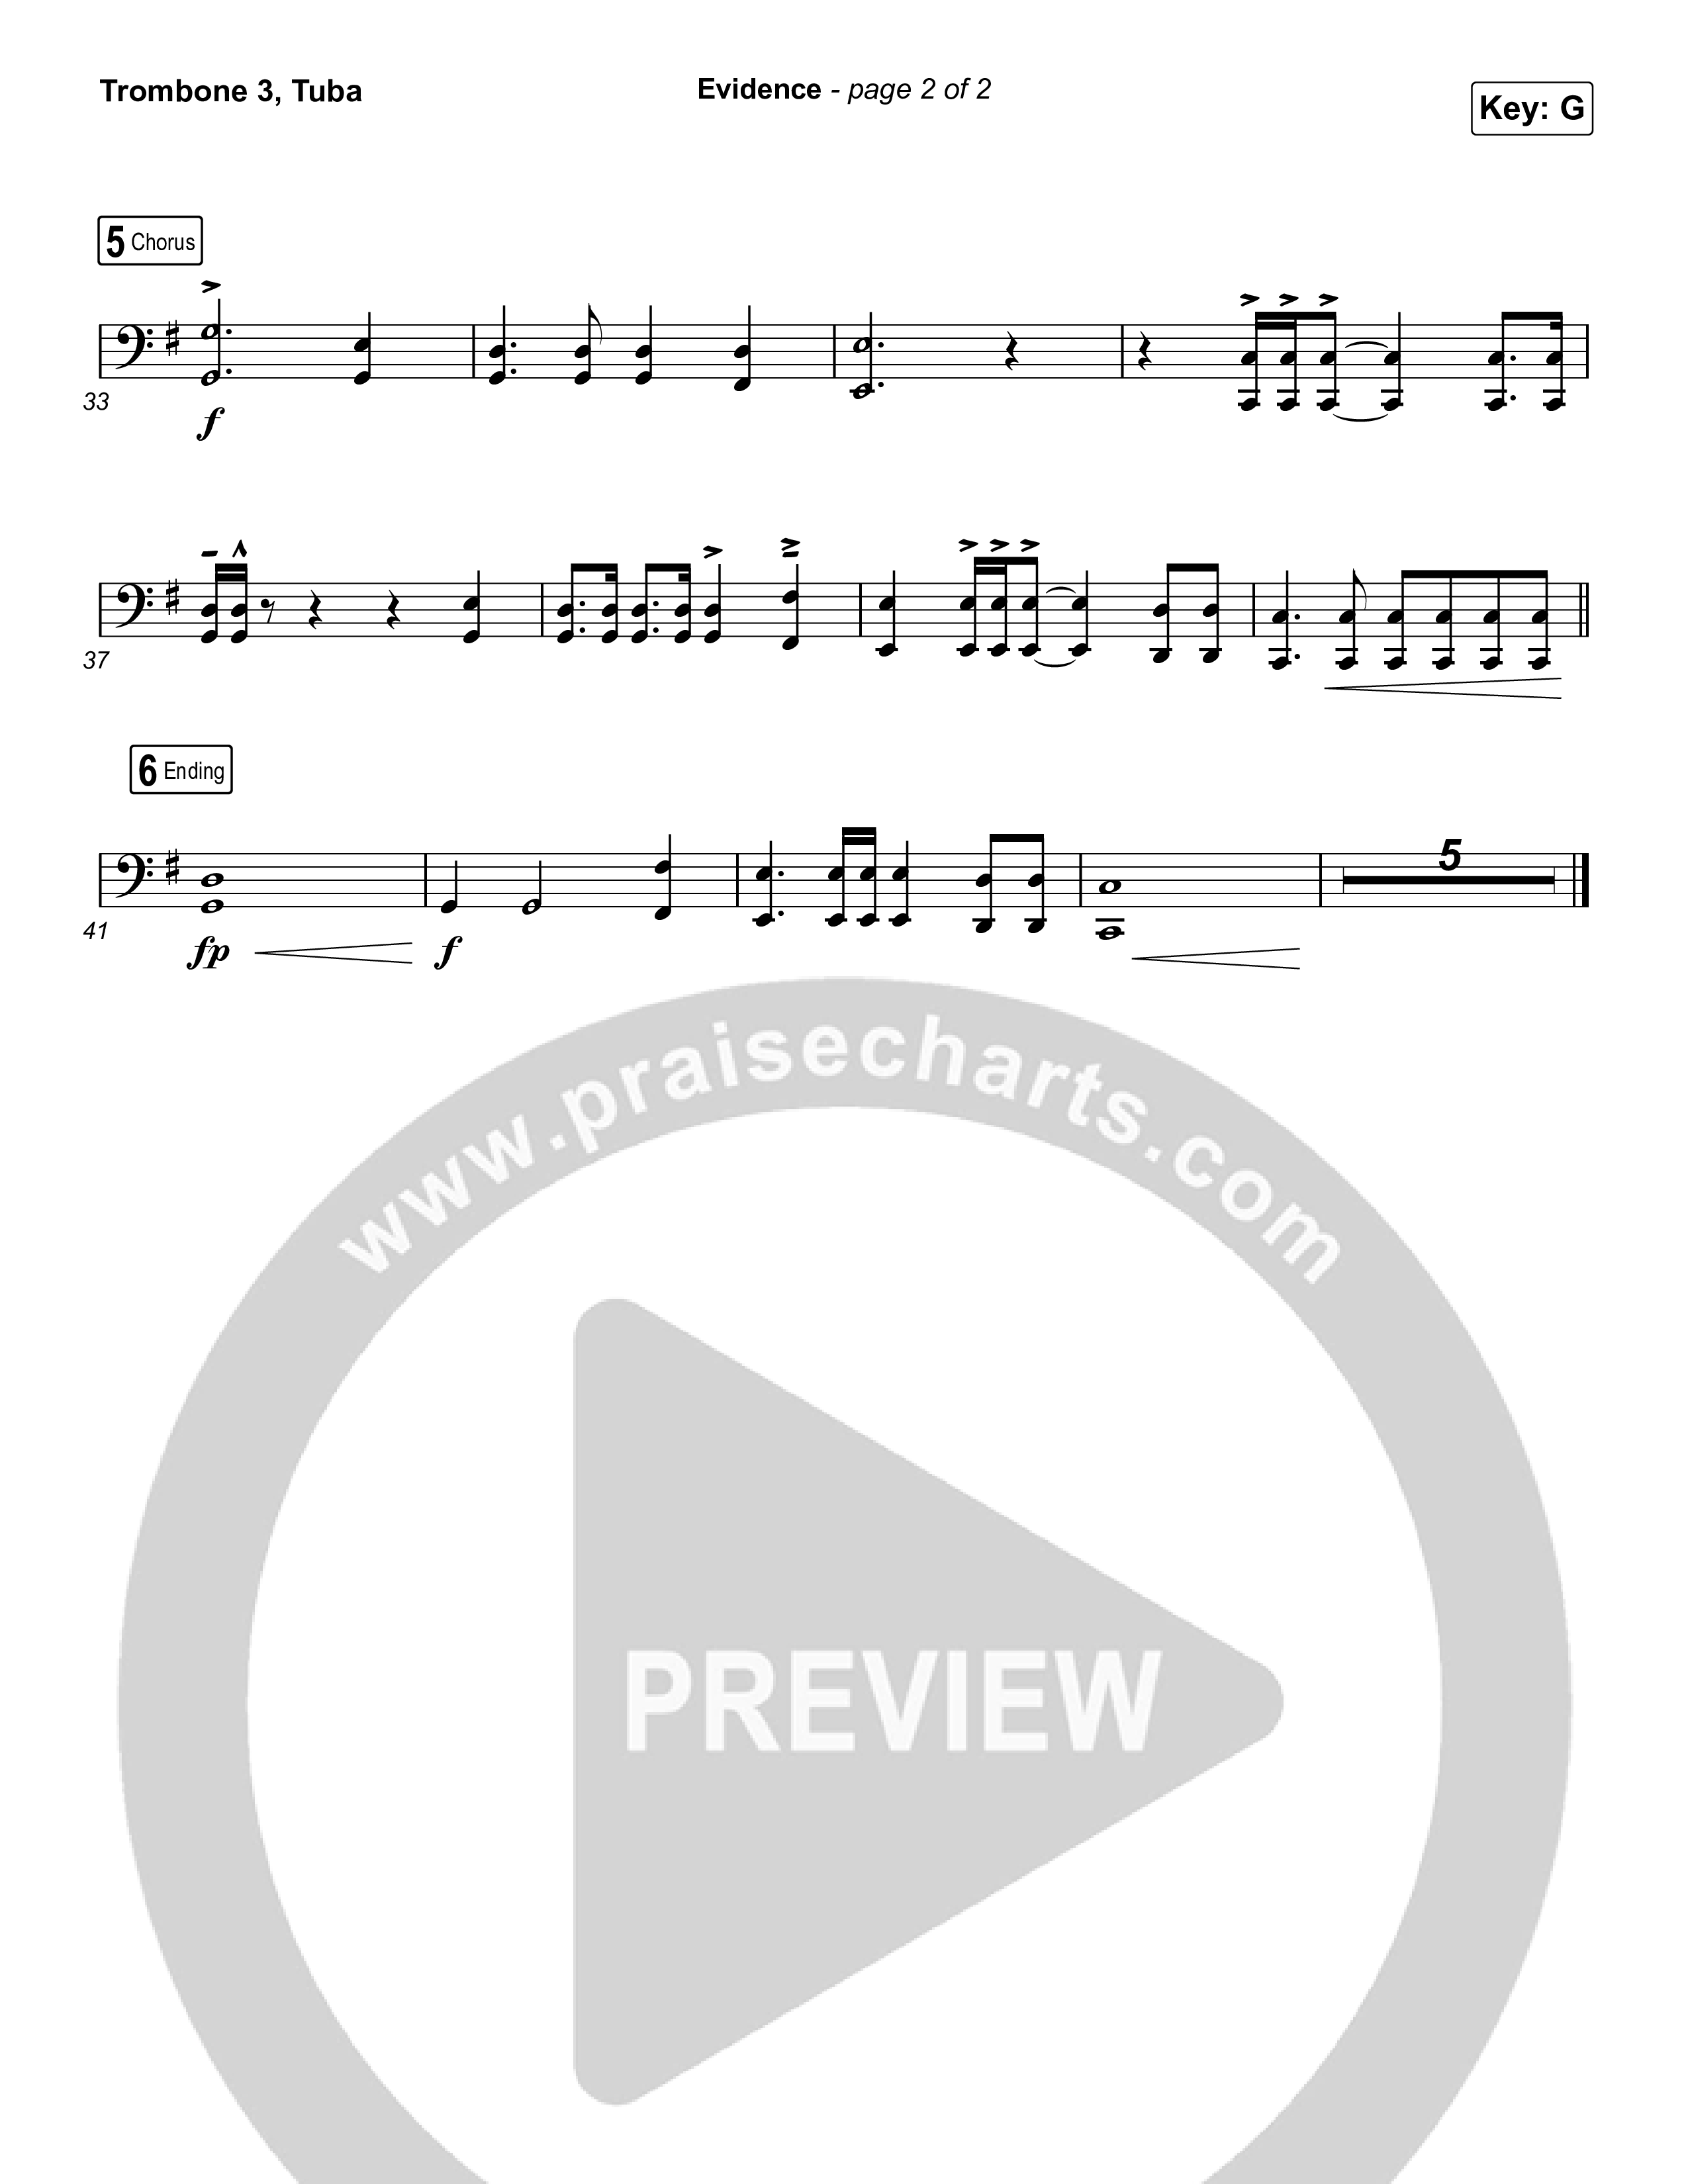 Evidence (Choral Anthem SATB) Trombone 3/Tuba (Josh Baldwin / Arr. Luke Gambill)